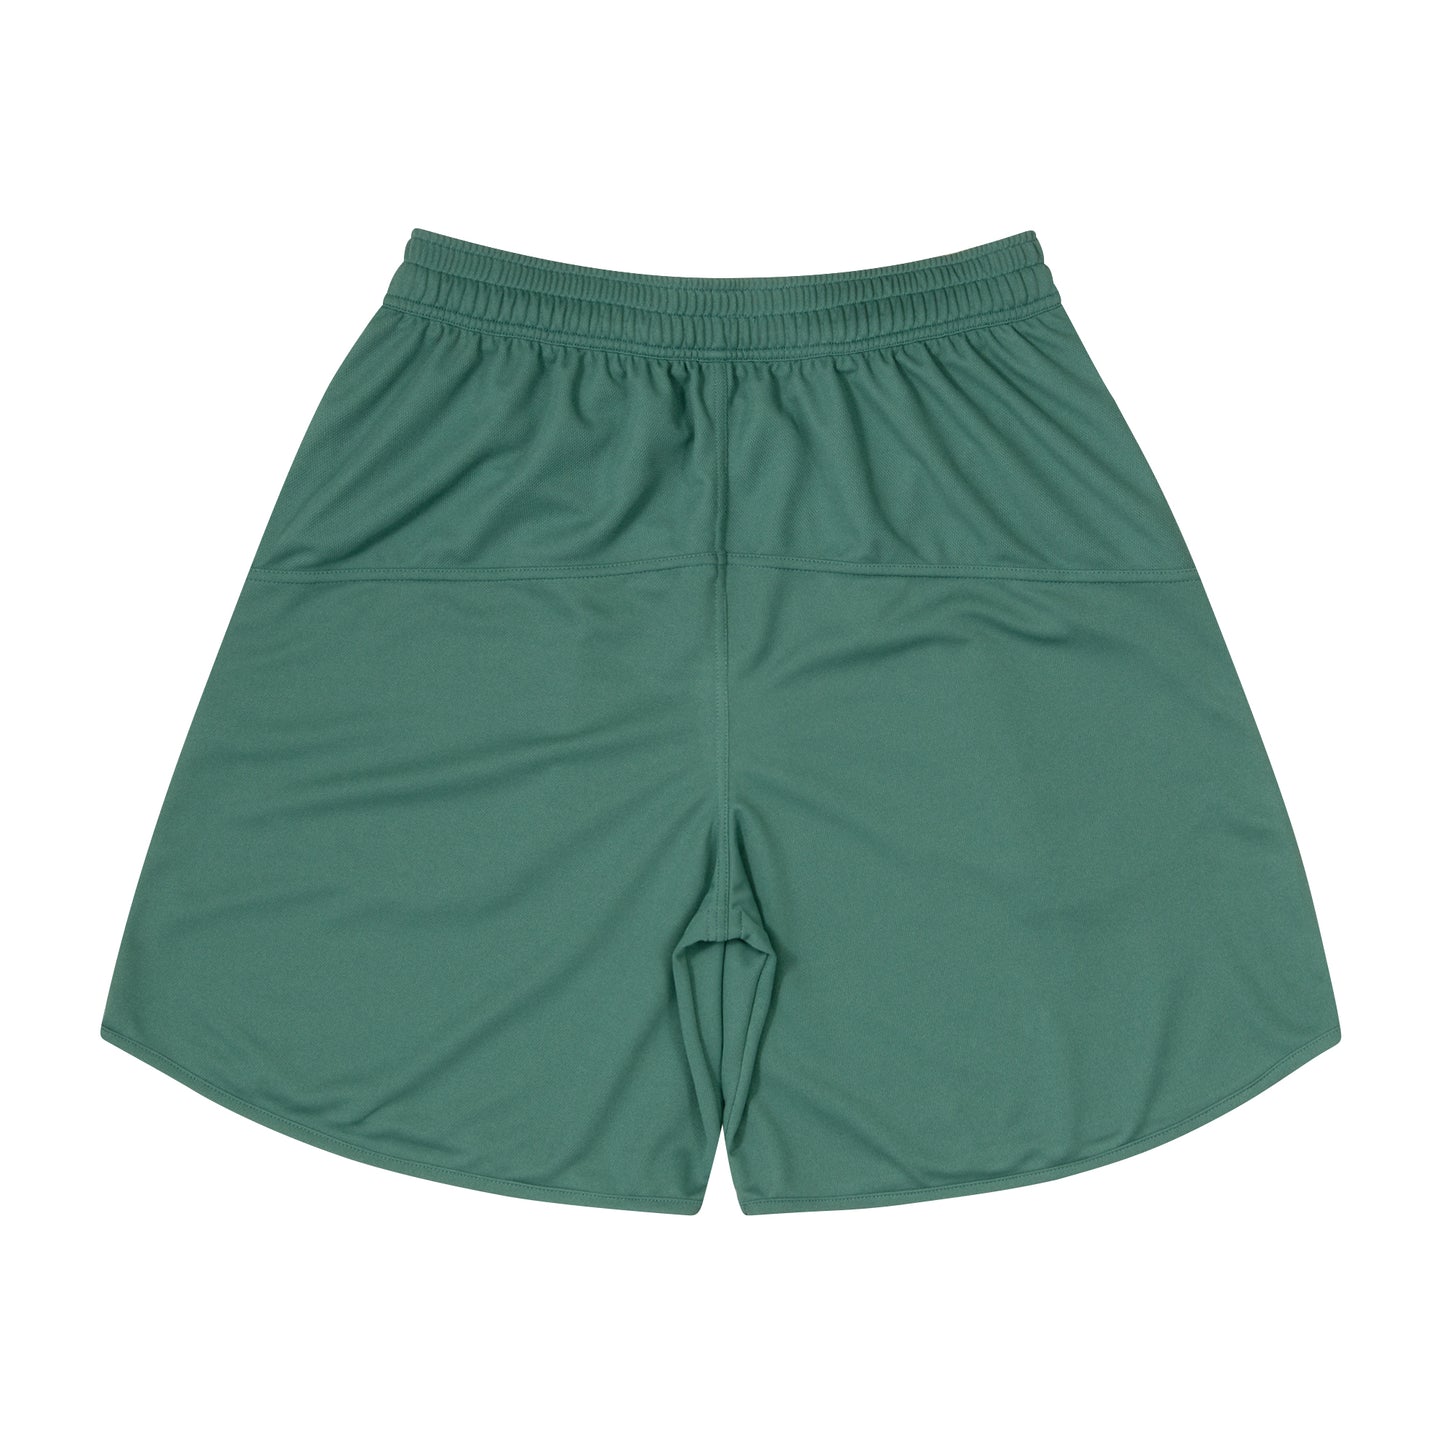 Basic Zip Shorts (antique green/off white)